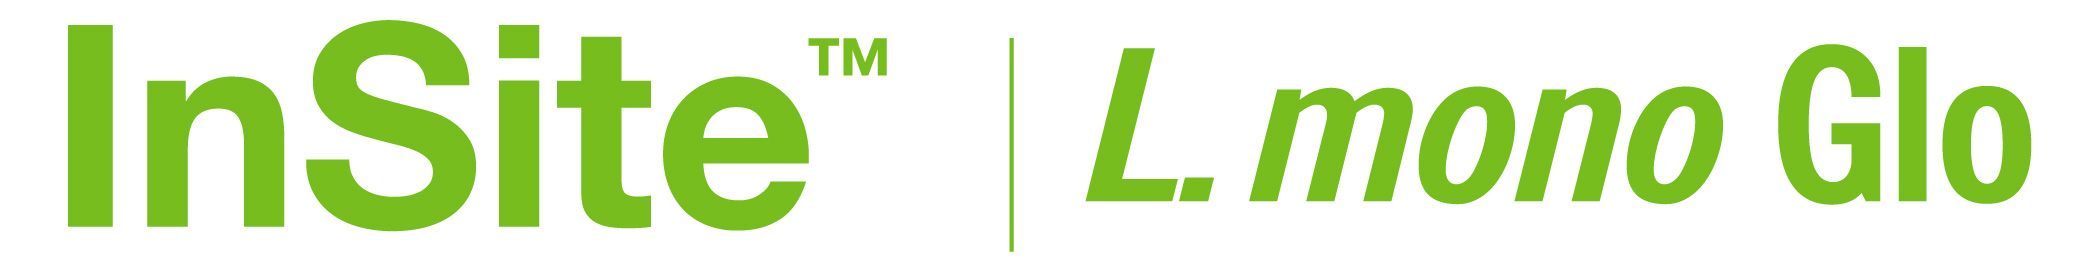 Insite_Lmono_logo-01.jpg